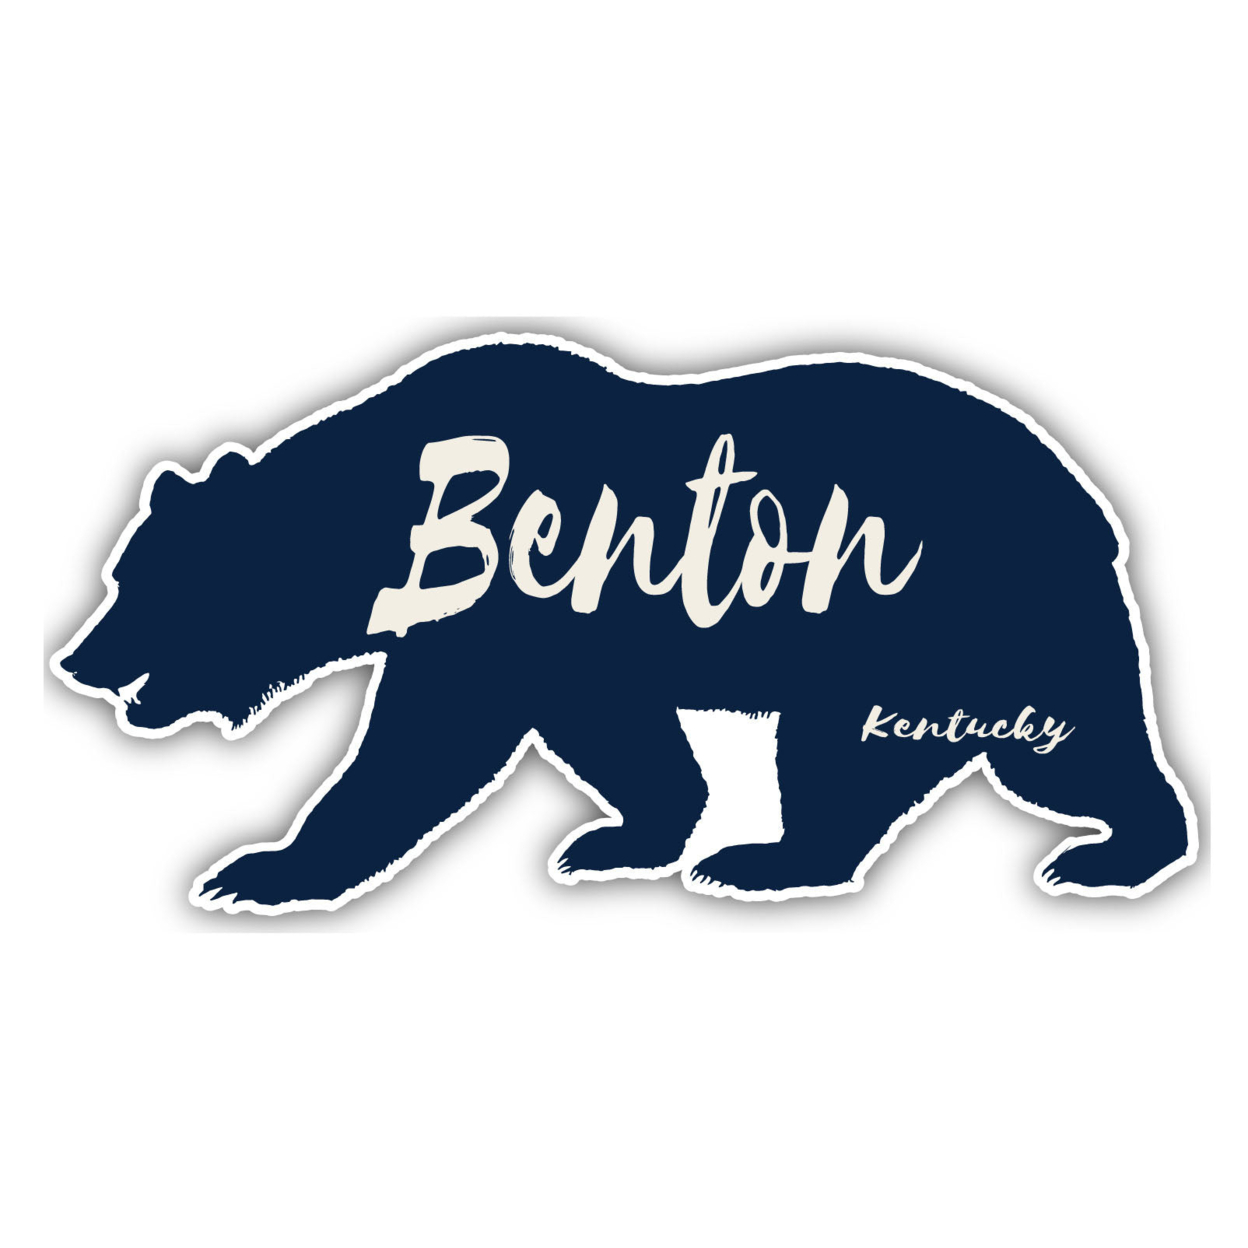 Benton Kentucky Souvenir Decorative Stickers (Choose Theme And Size) - 4-Pack, 10-Inch, Bear